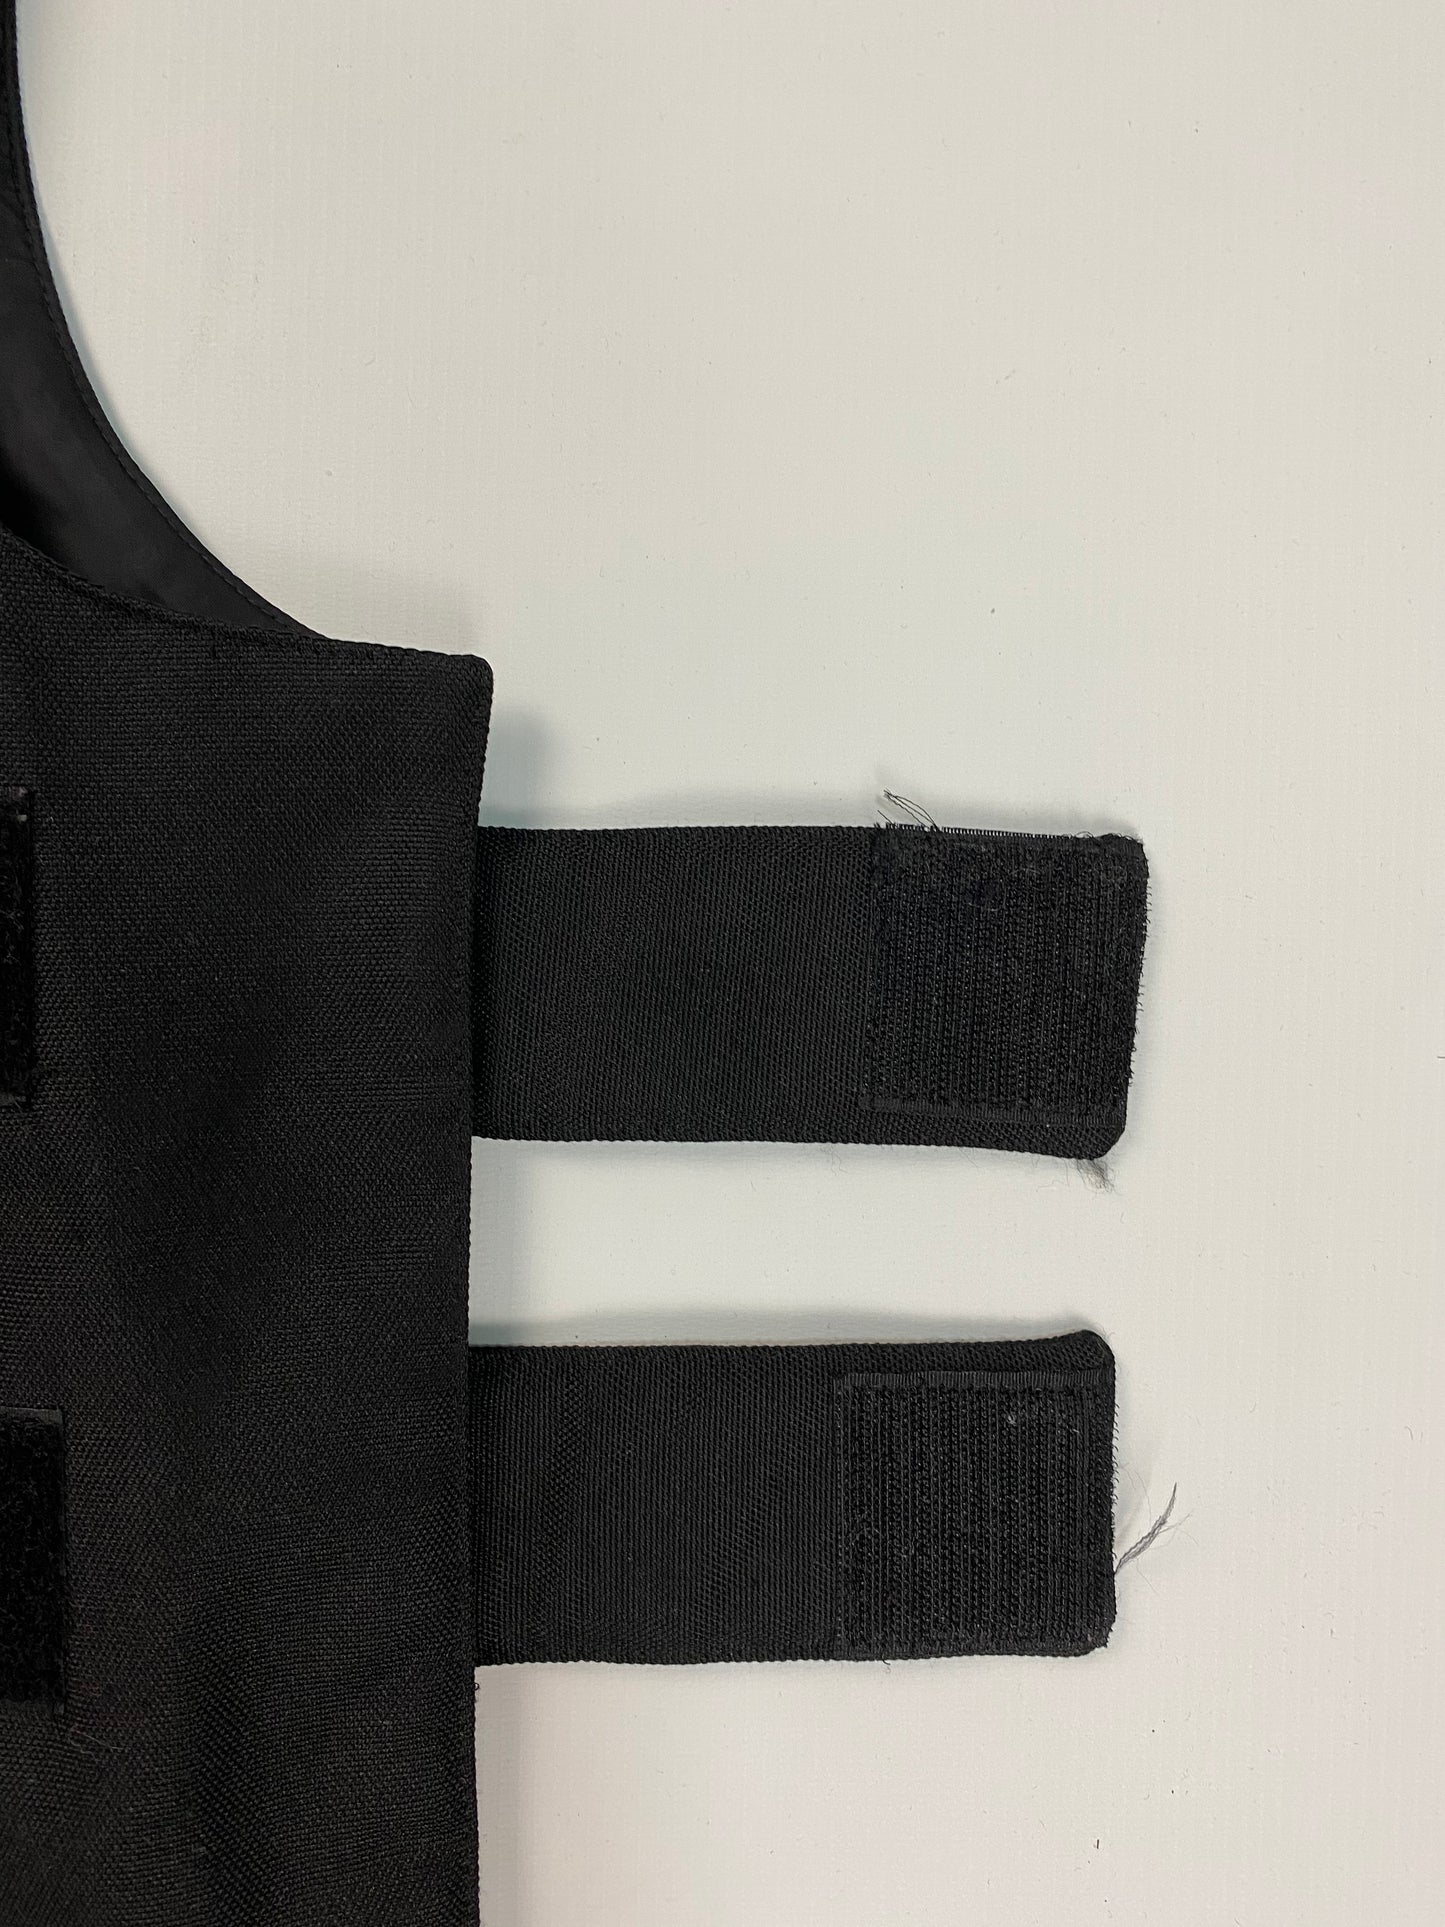 Helmut Lang bulletproof vest from 1998 SZ:50